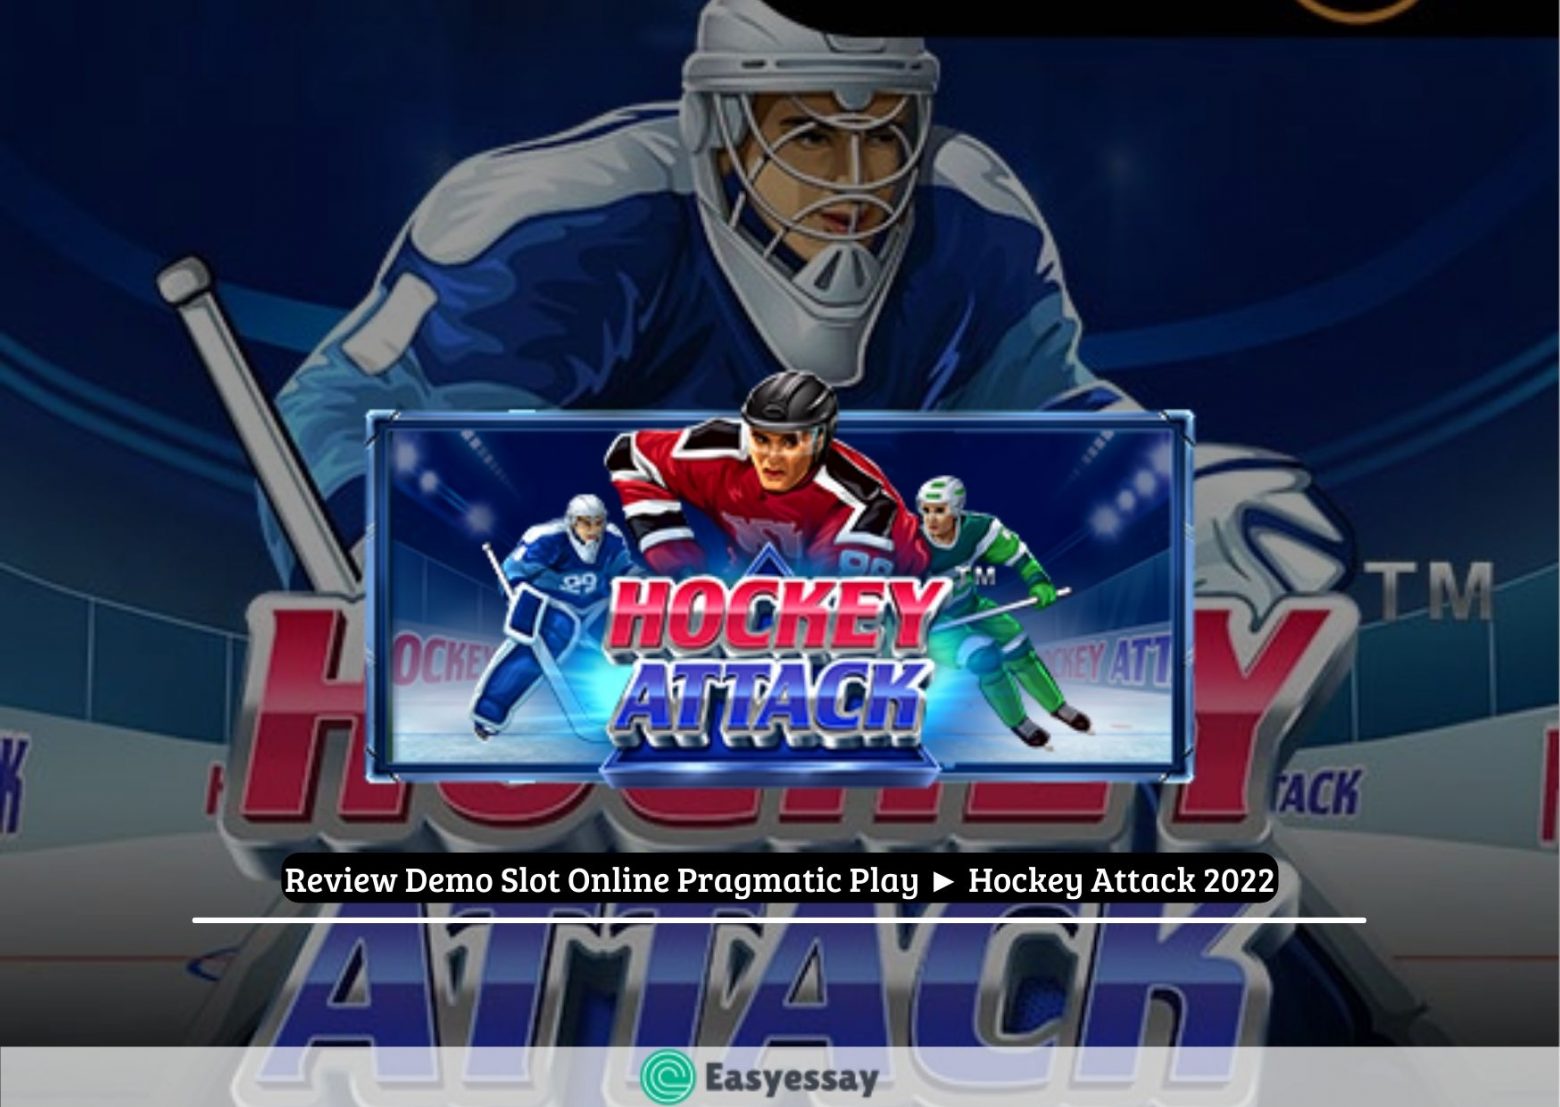 Review Demo Slot Online Pragmatic Play ► Hockey Attack 2022